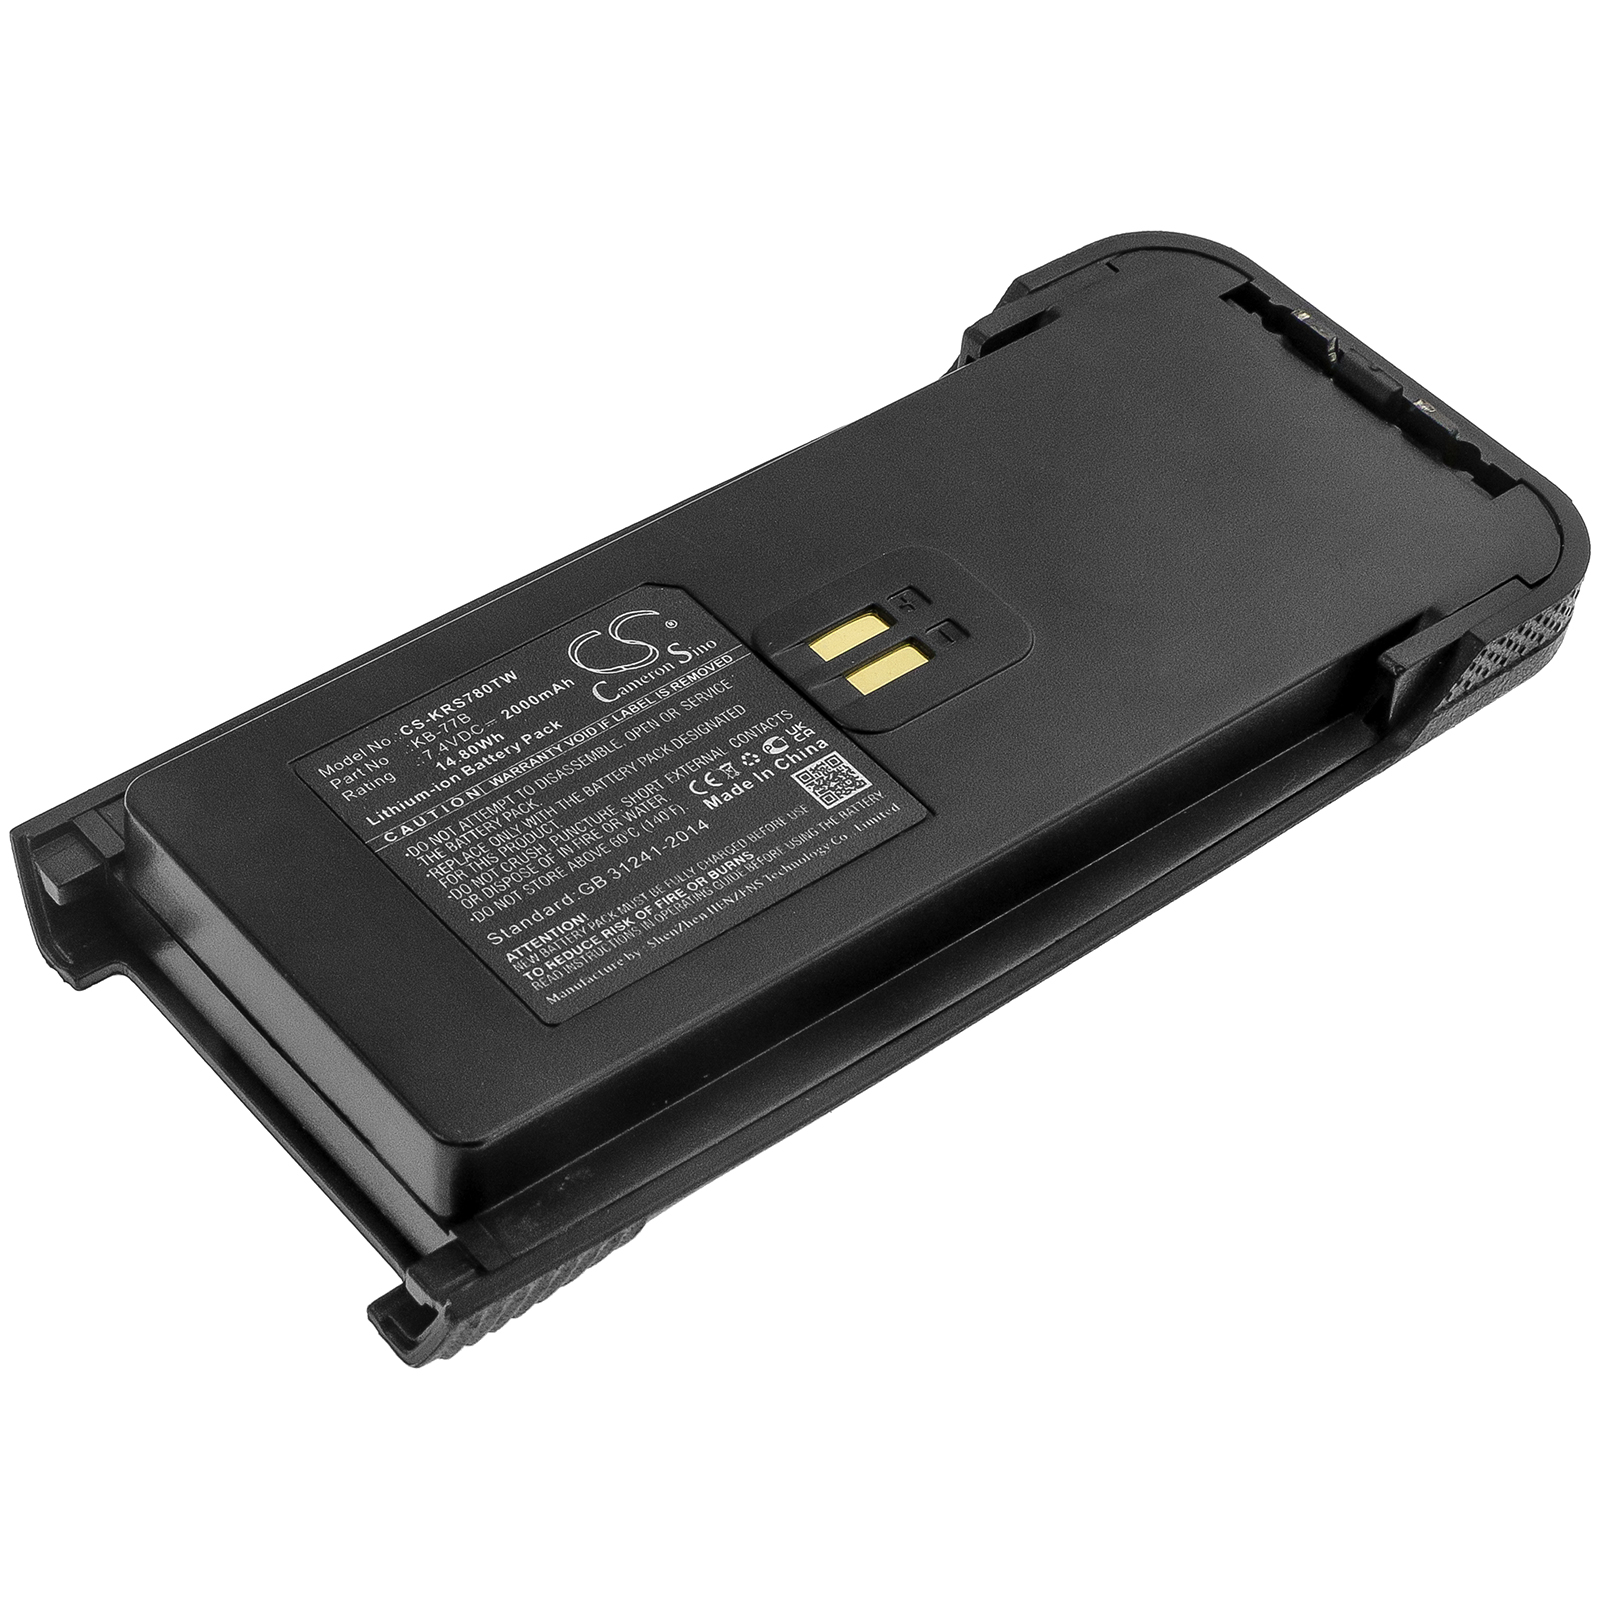 Kirisun KB-77B Compatible Replacement Battery